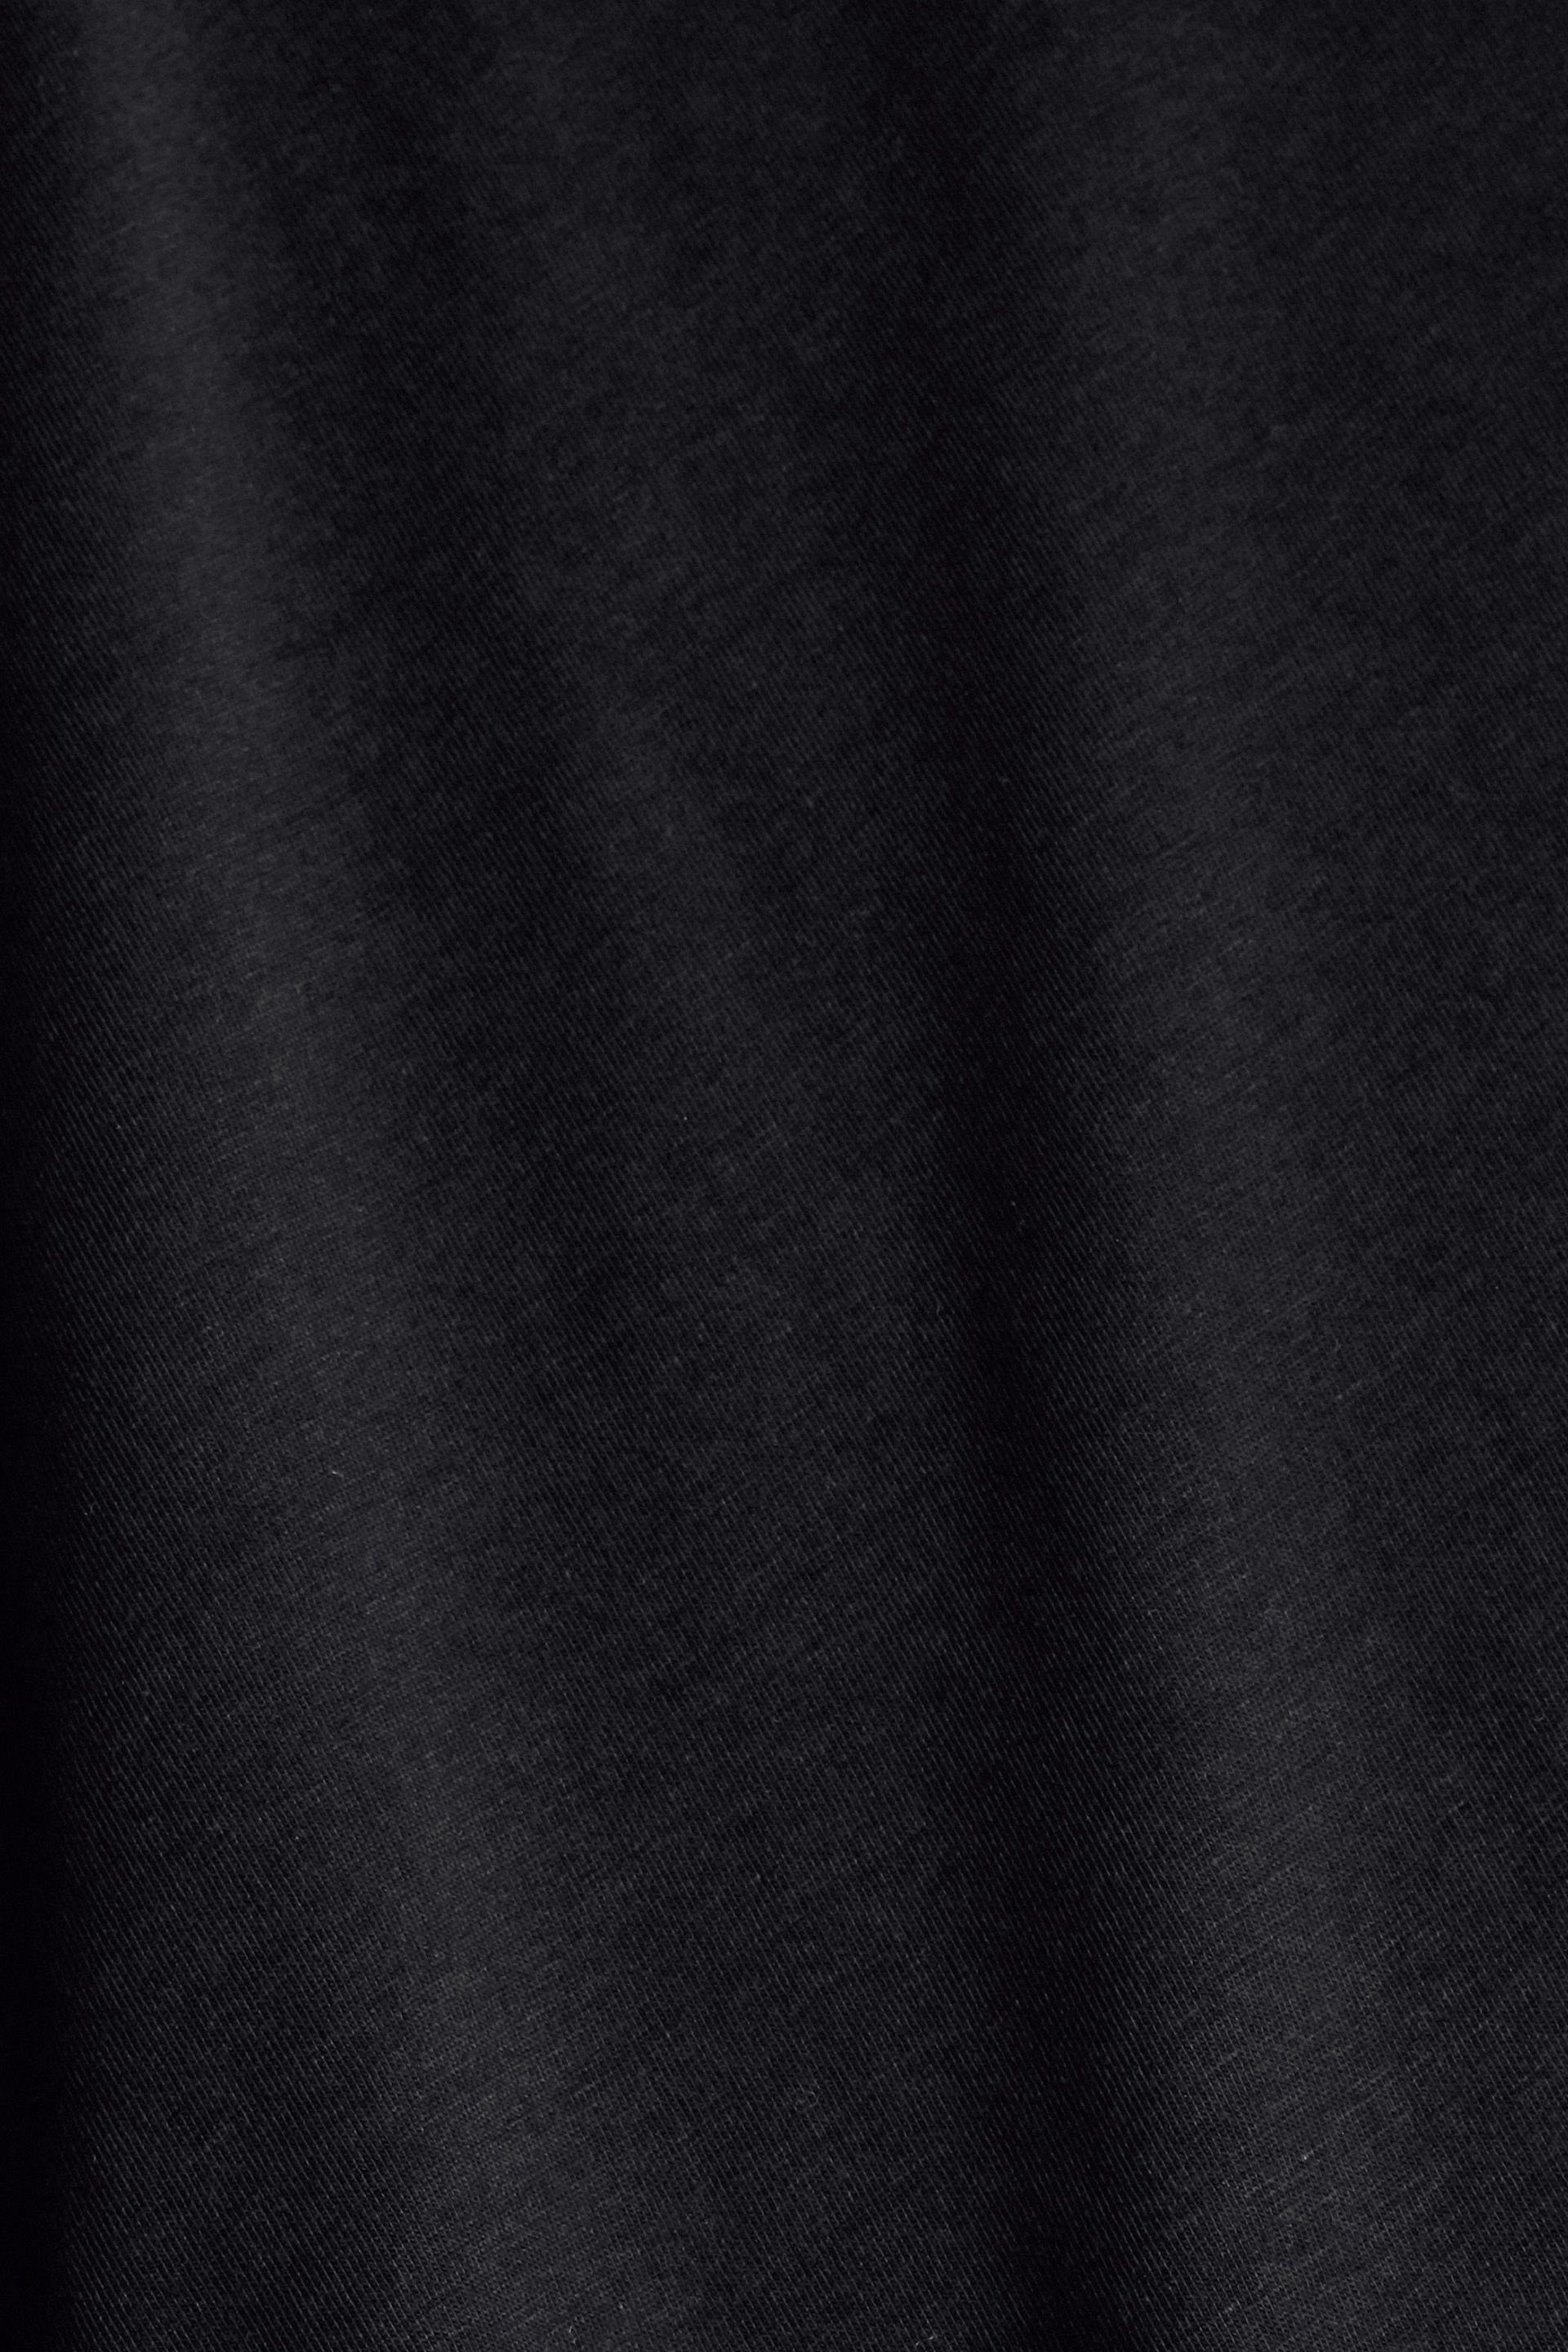 T-Shirt Esprit black